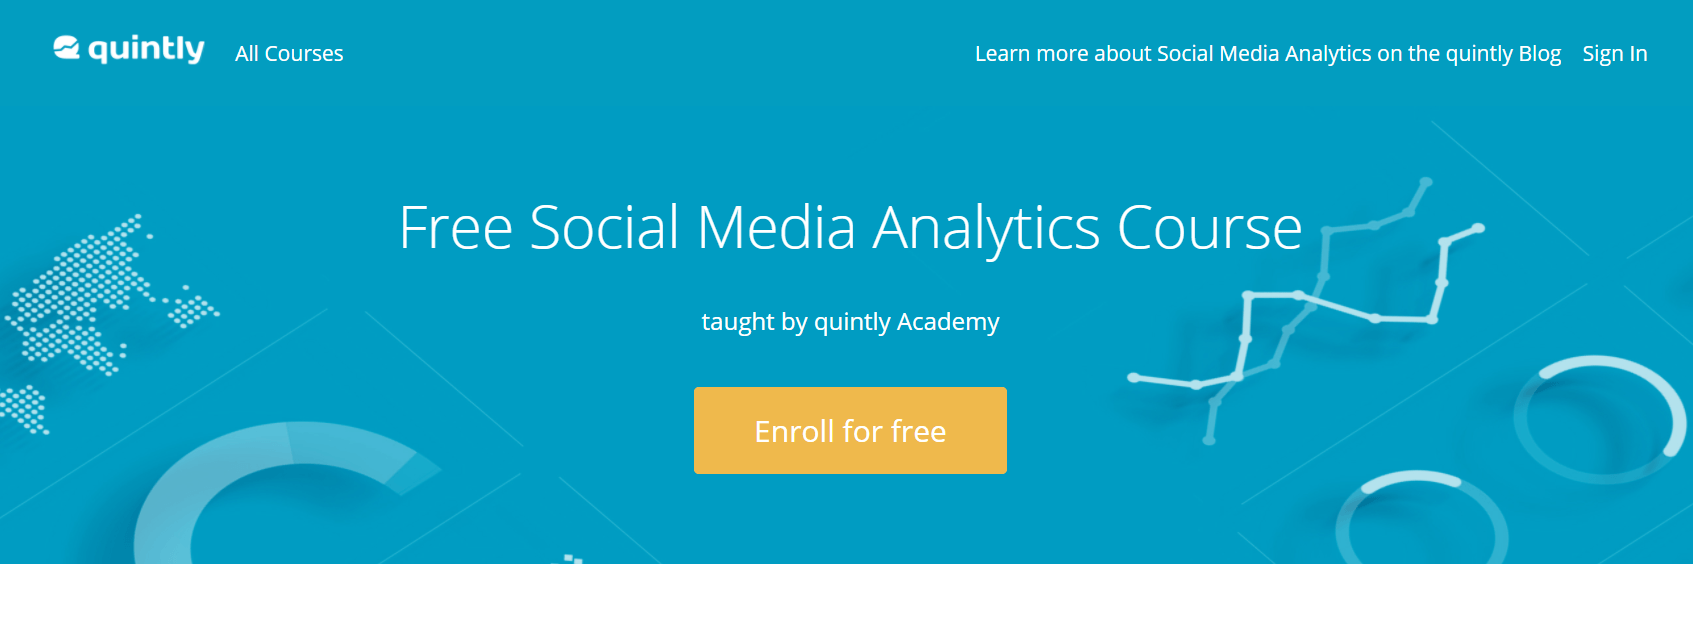 Free social media analytics course